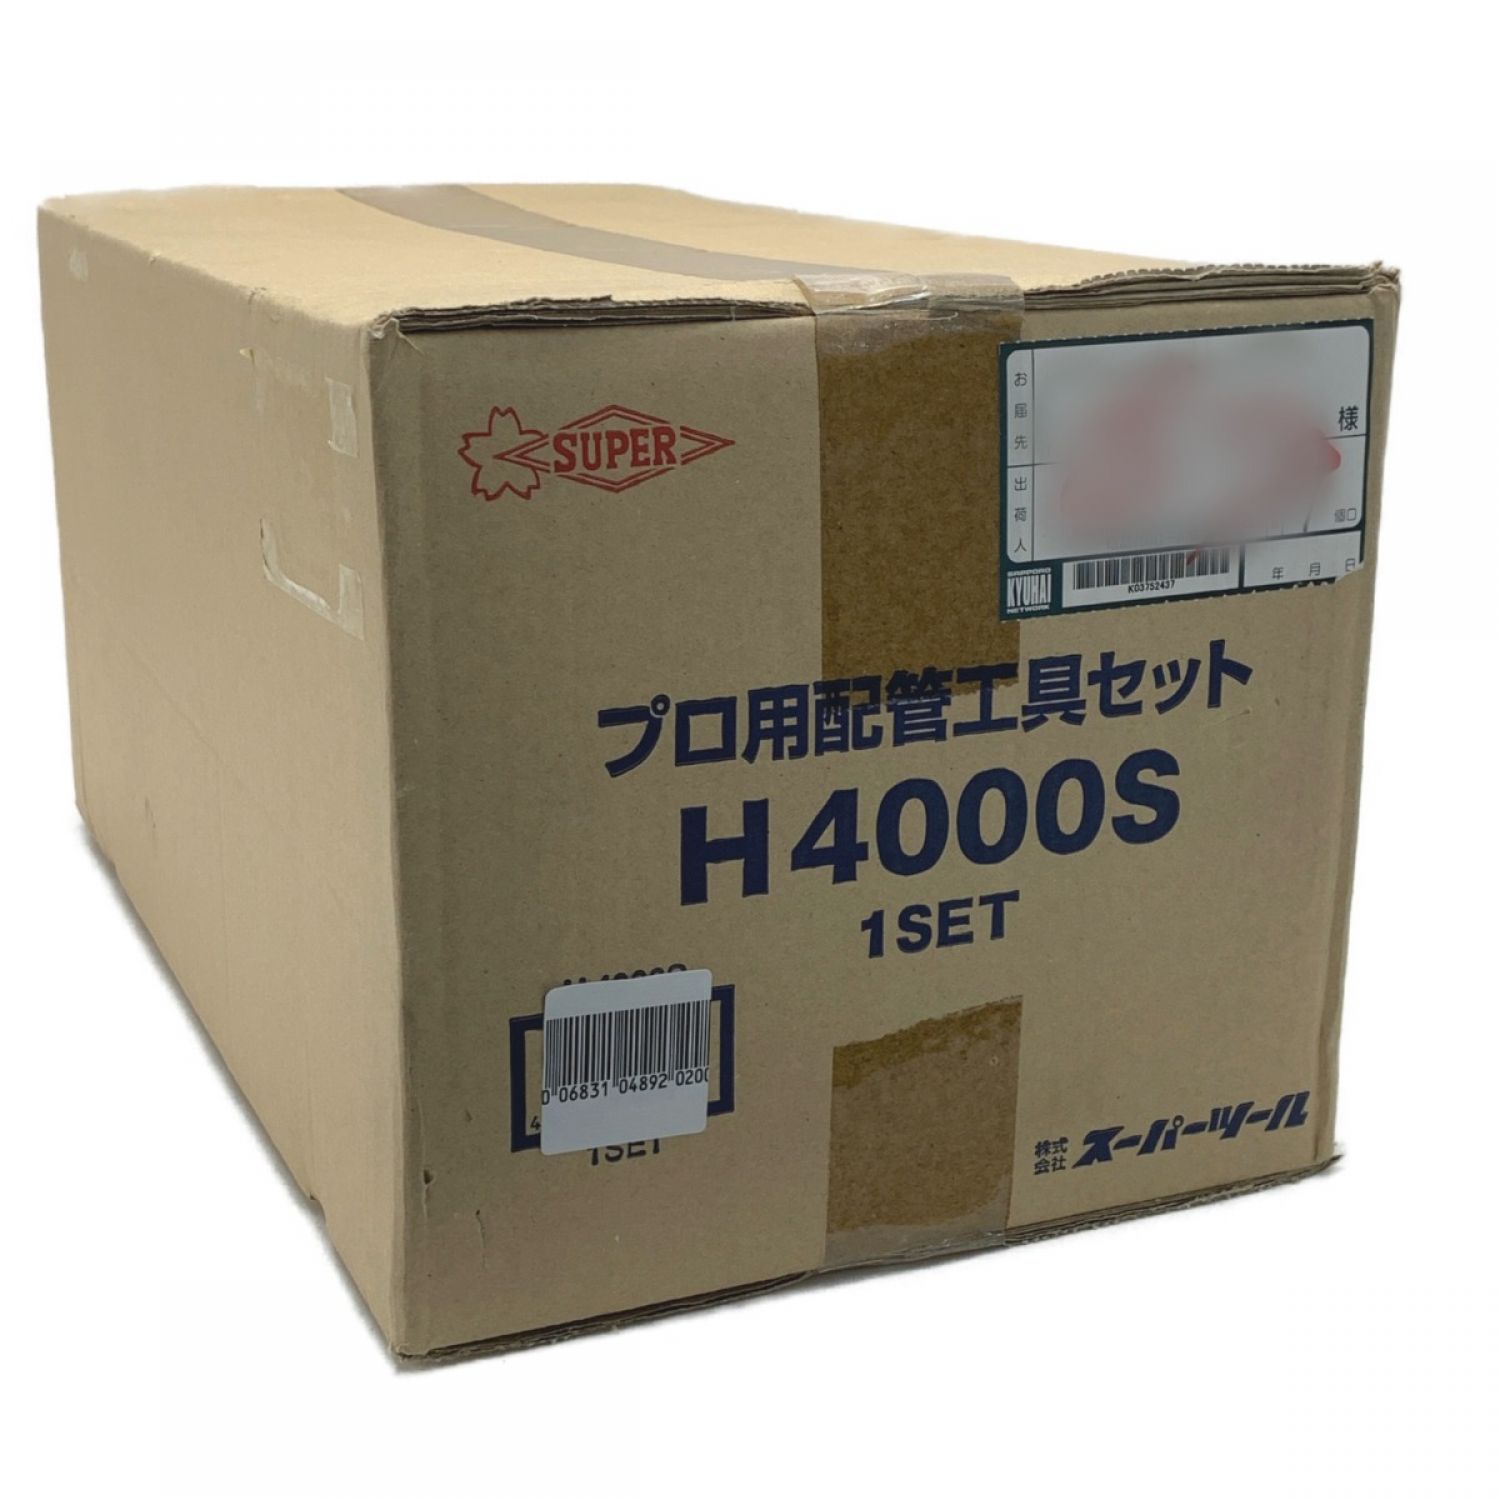 ☆☆SUPER スーパー《 プロ用配管工具セット 》スタンダードタイプ / H4000Sブラックケース寸法